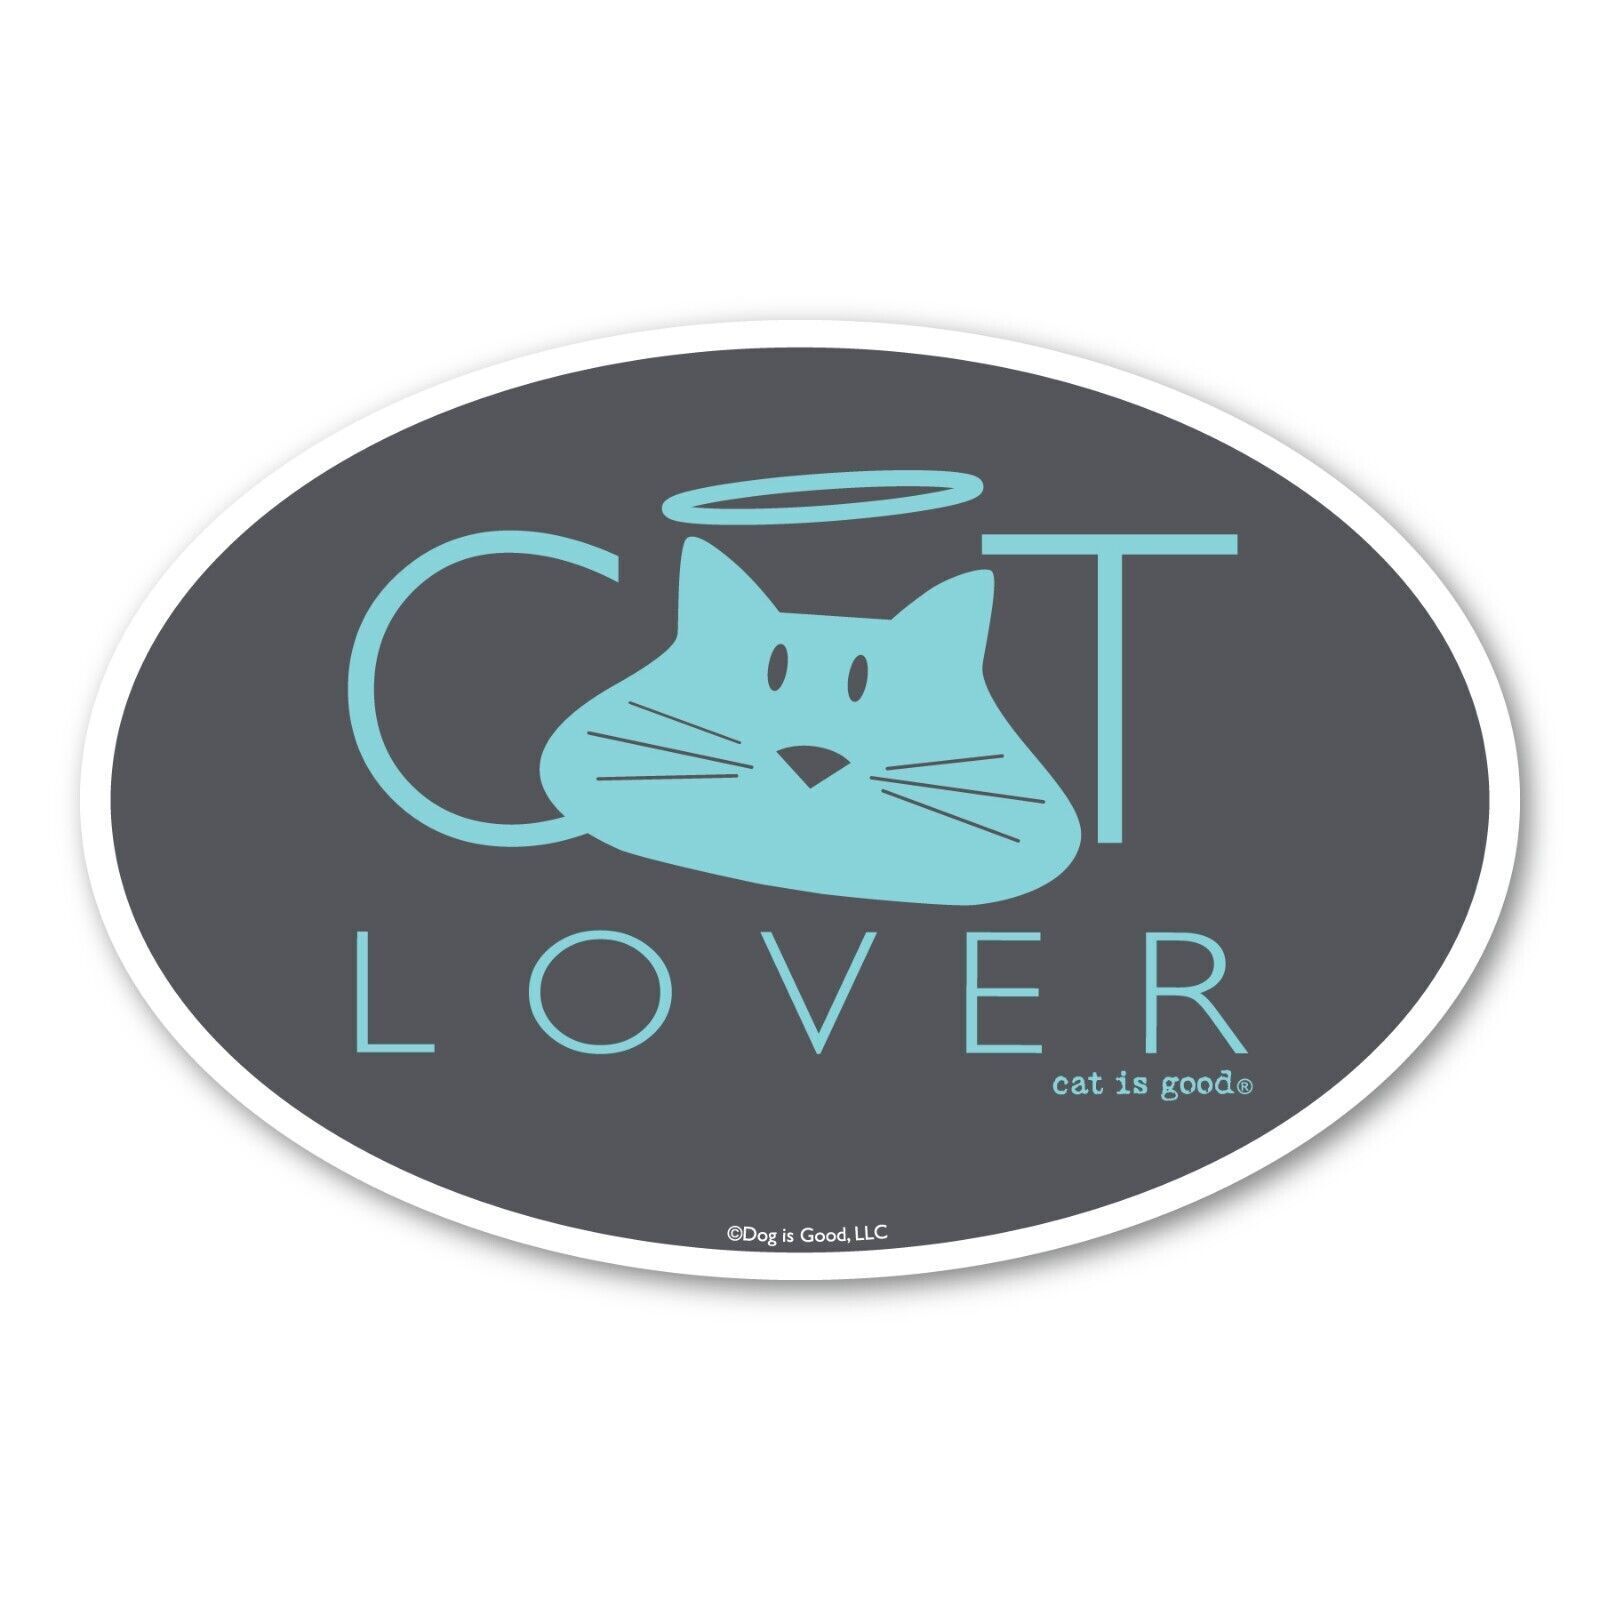 CAT LOVER Oval Magnet